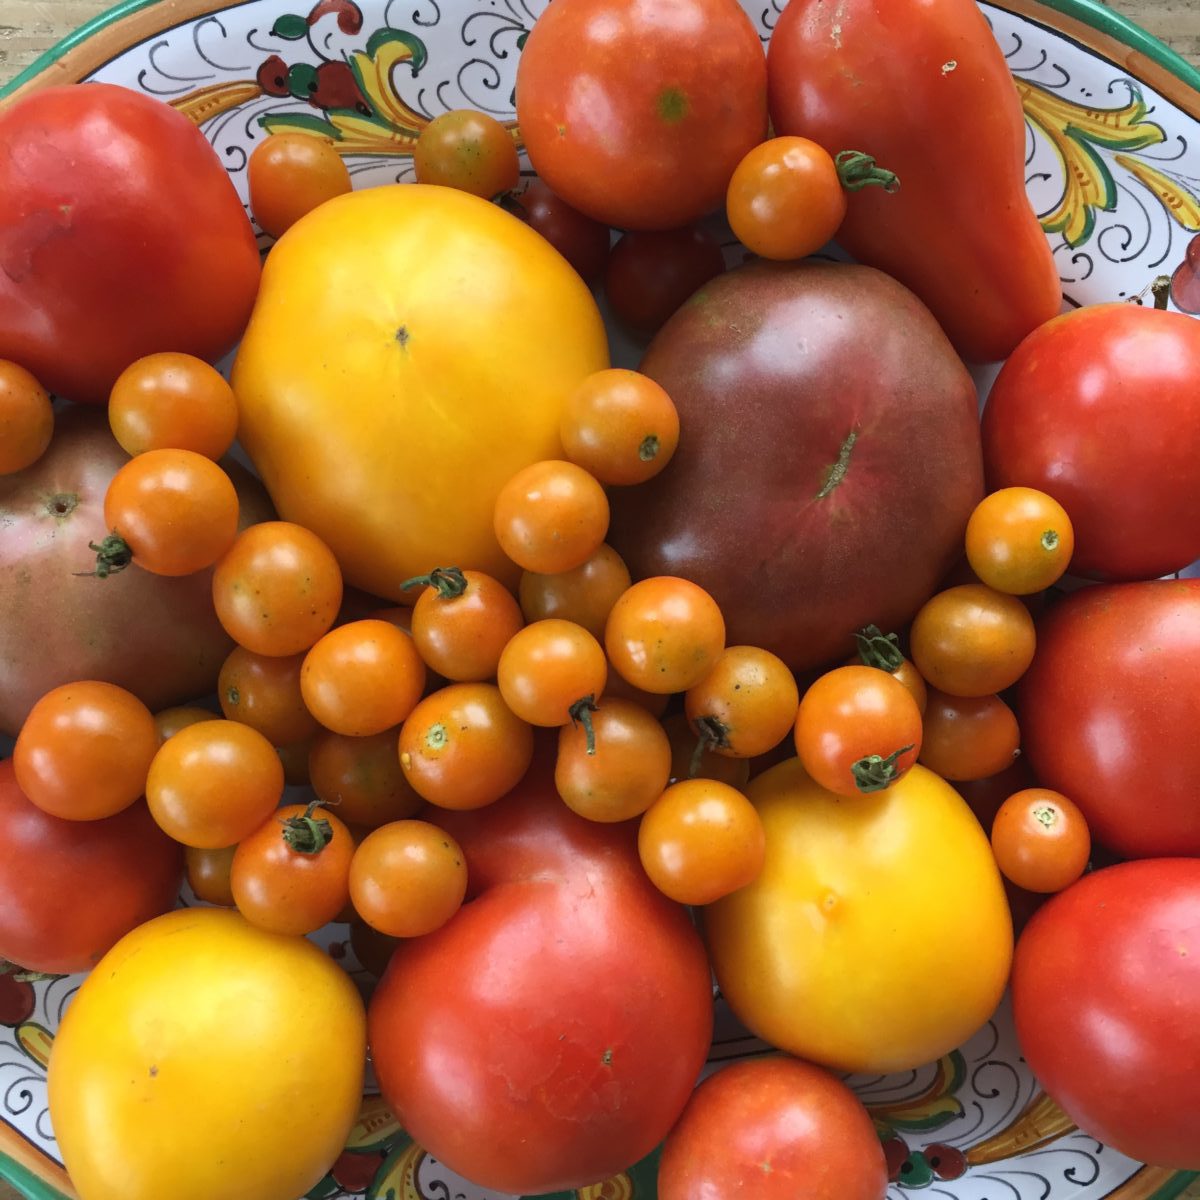 oodles of tomatoes! Lemon Boy, Cherokee Purple, Early Girl, Brandywine, Sungold, Marglobe, San Marzano plum,...